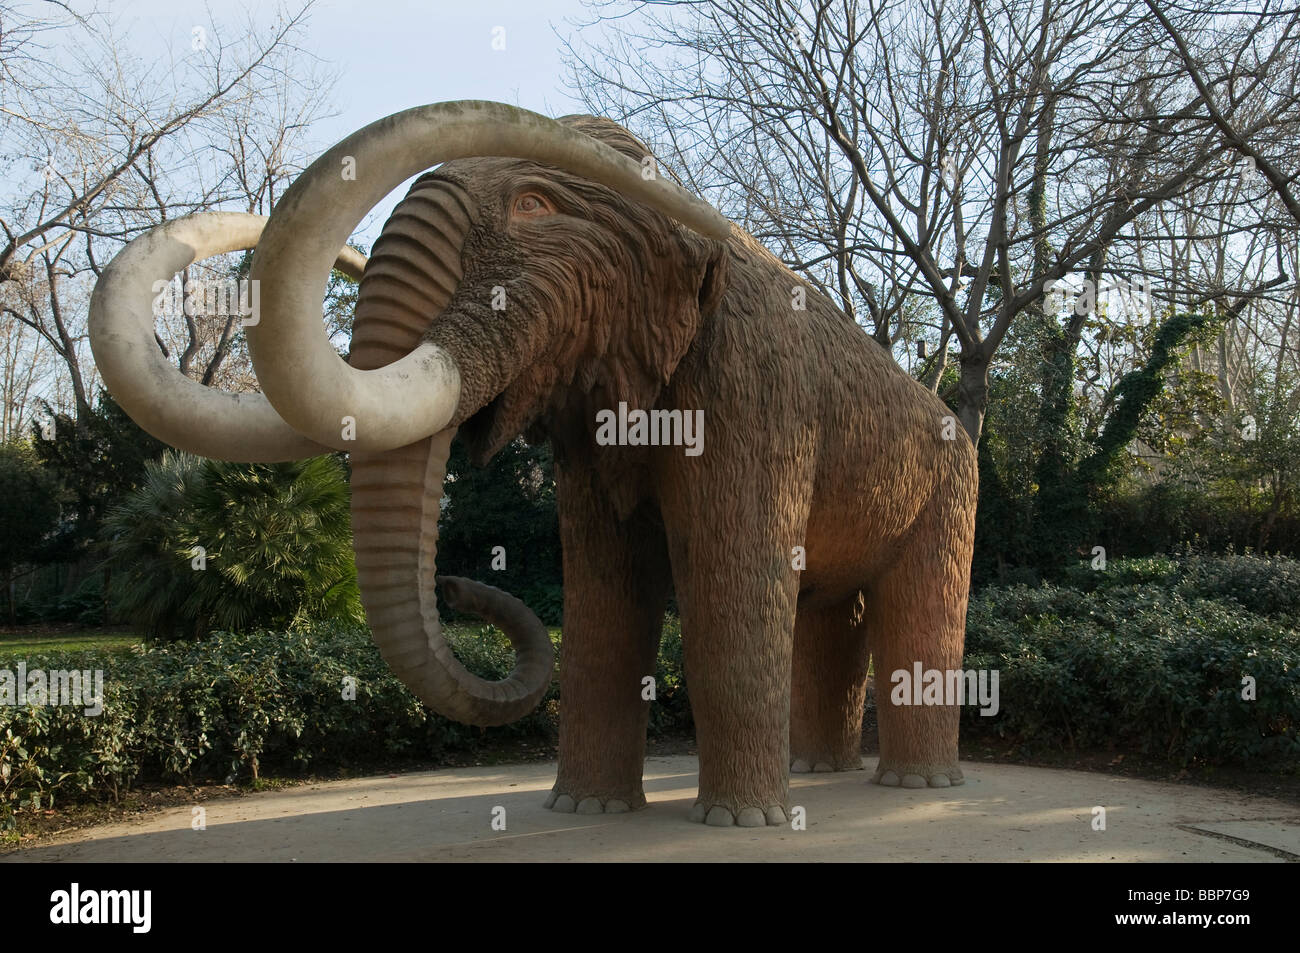 Mammoth. Stock Photo